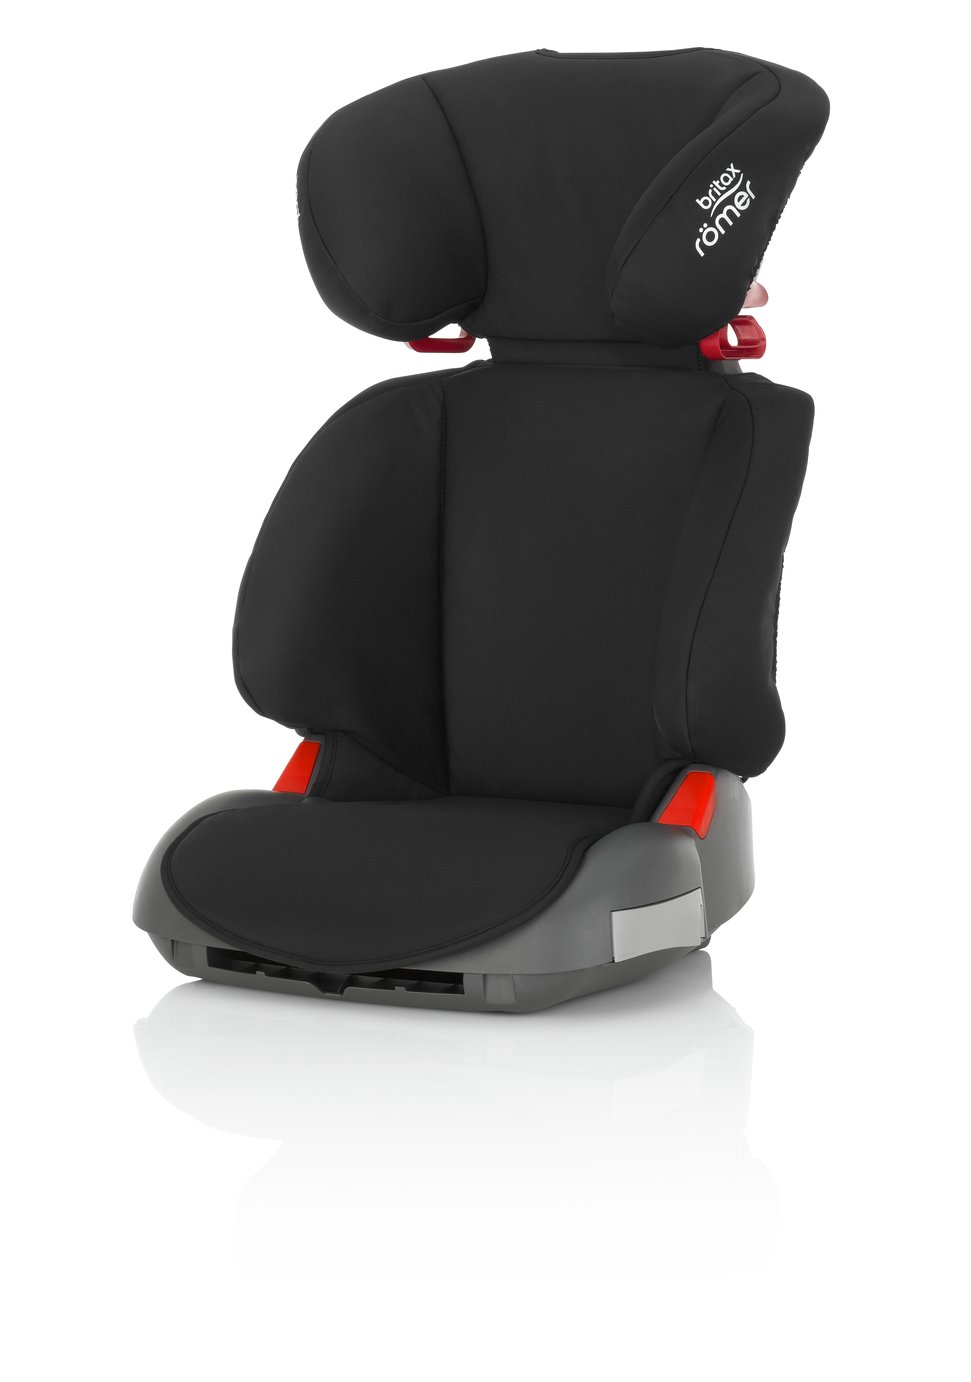 3 Car Seat - Cosmos Black | Car seats 